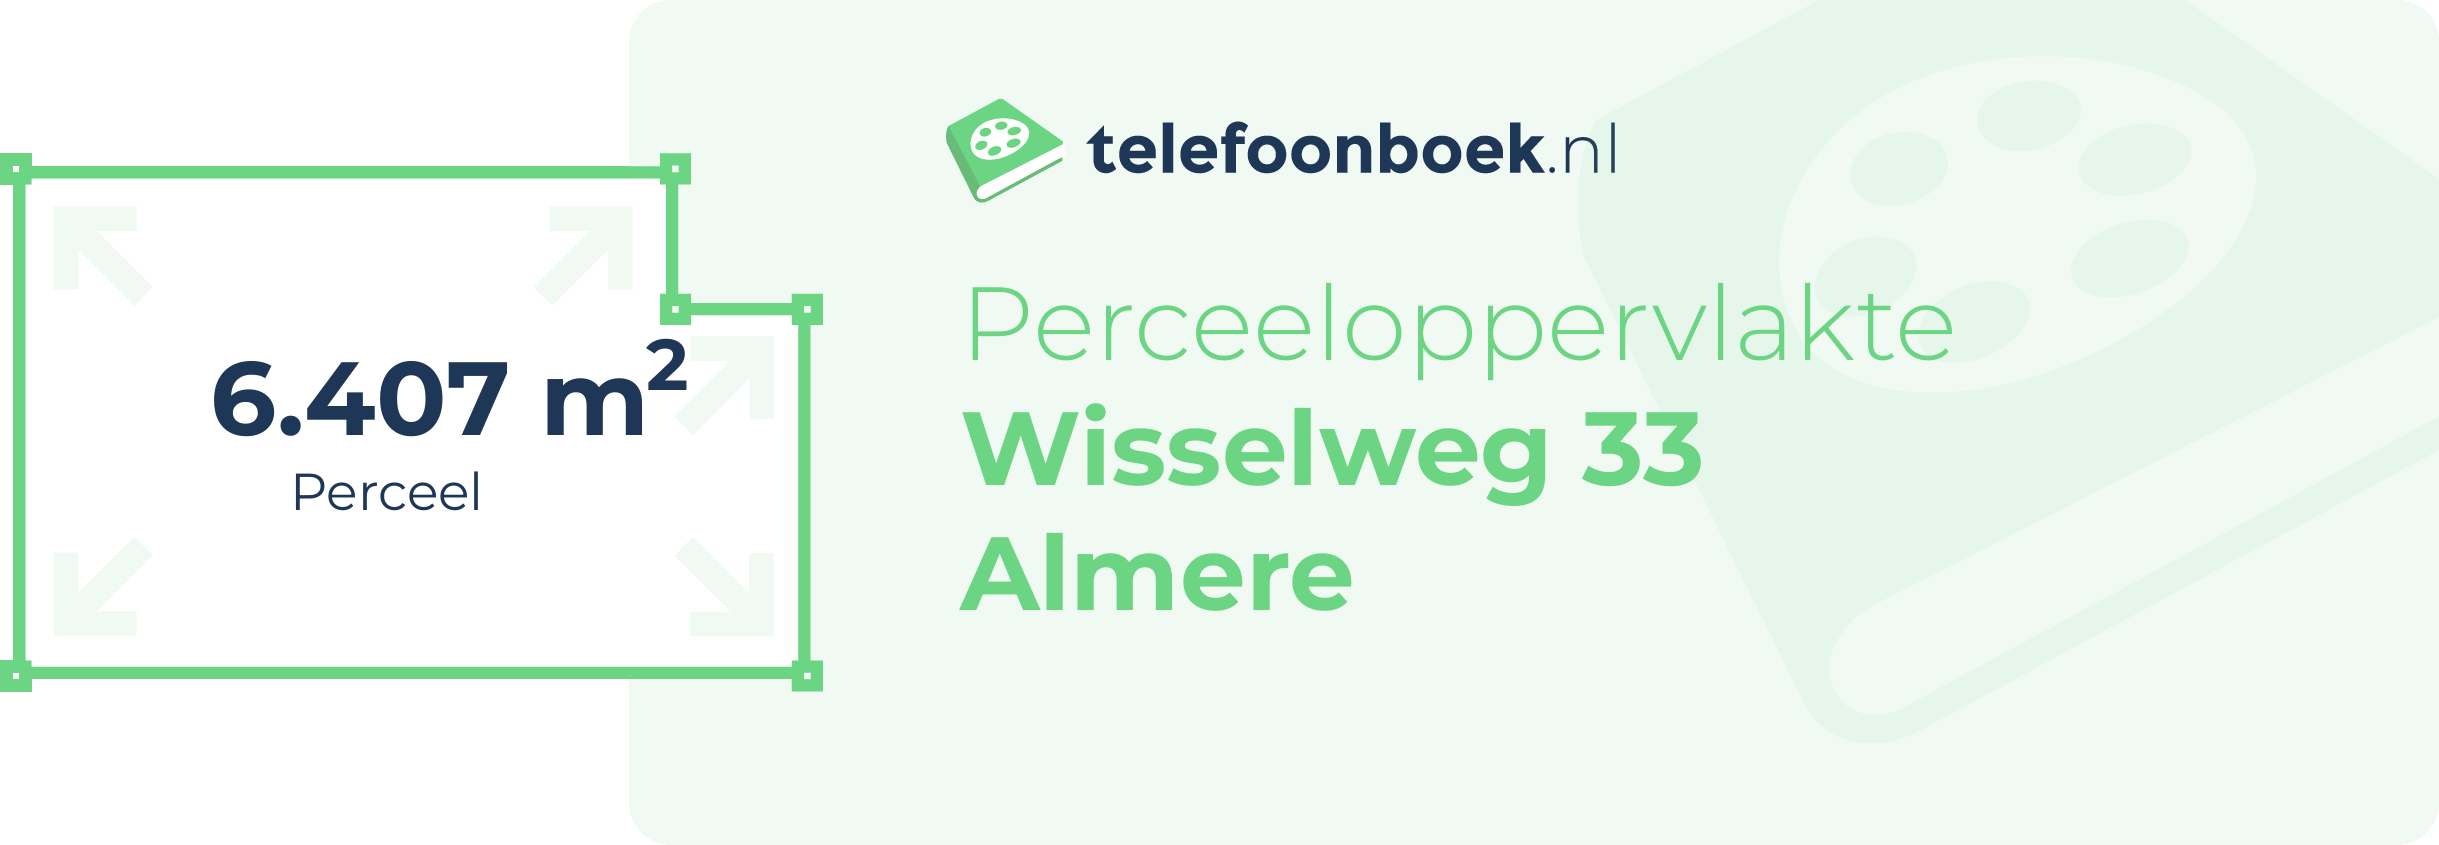 Perceeloppervlakte Wisselweg 33 Almere